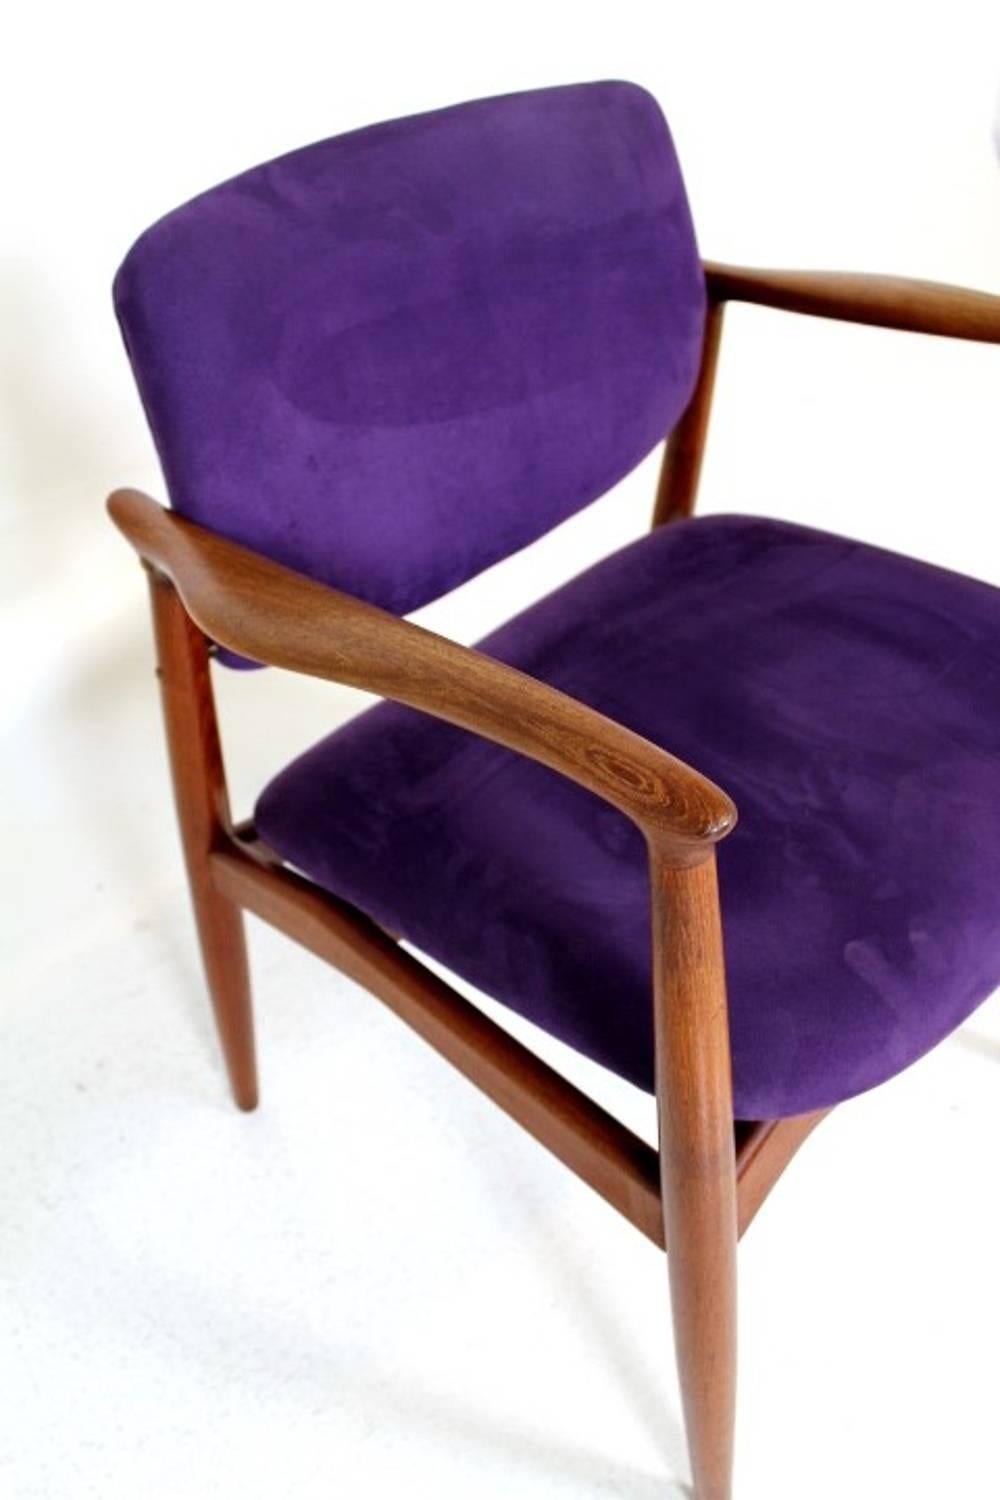 Mid-20th Century Scandinavian Armchair in Teak and Alcantara Upholstery Erik Buch Model 67 For Sale